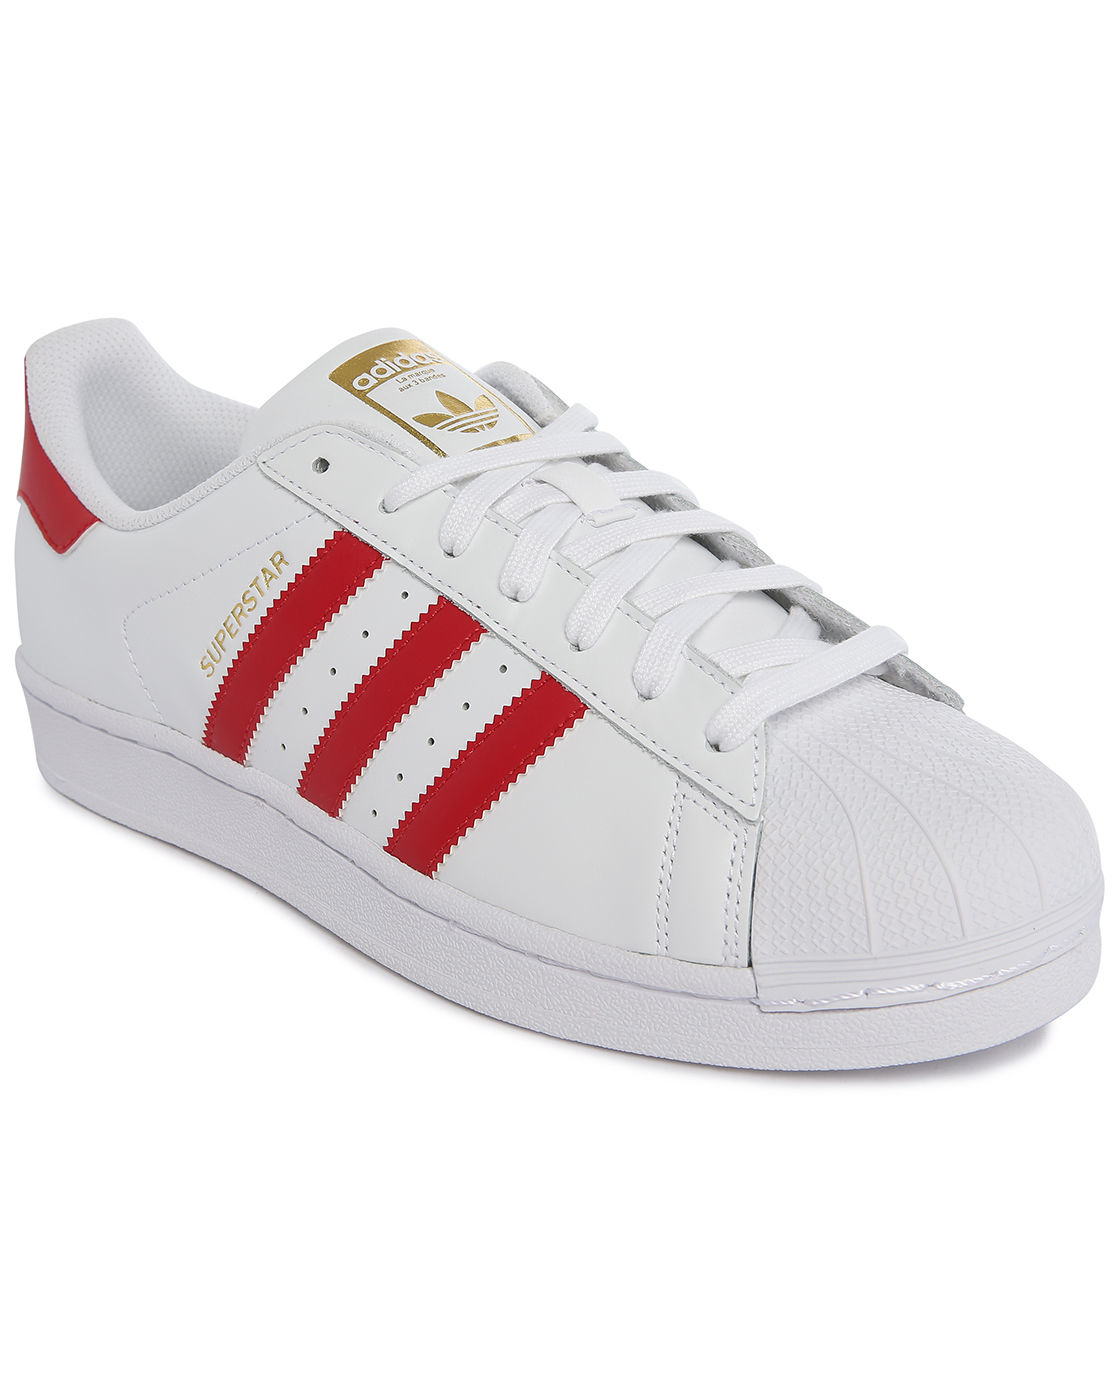 Adidas originals Superstar Classic Mono White/red Stripes Leather